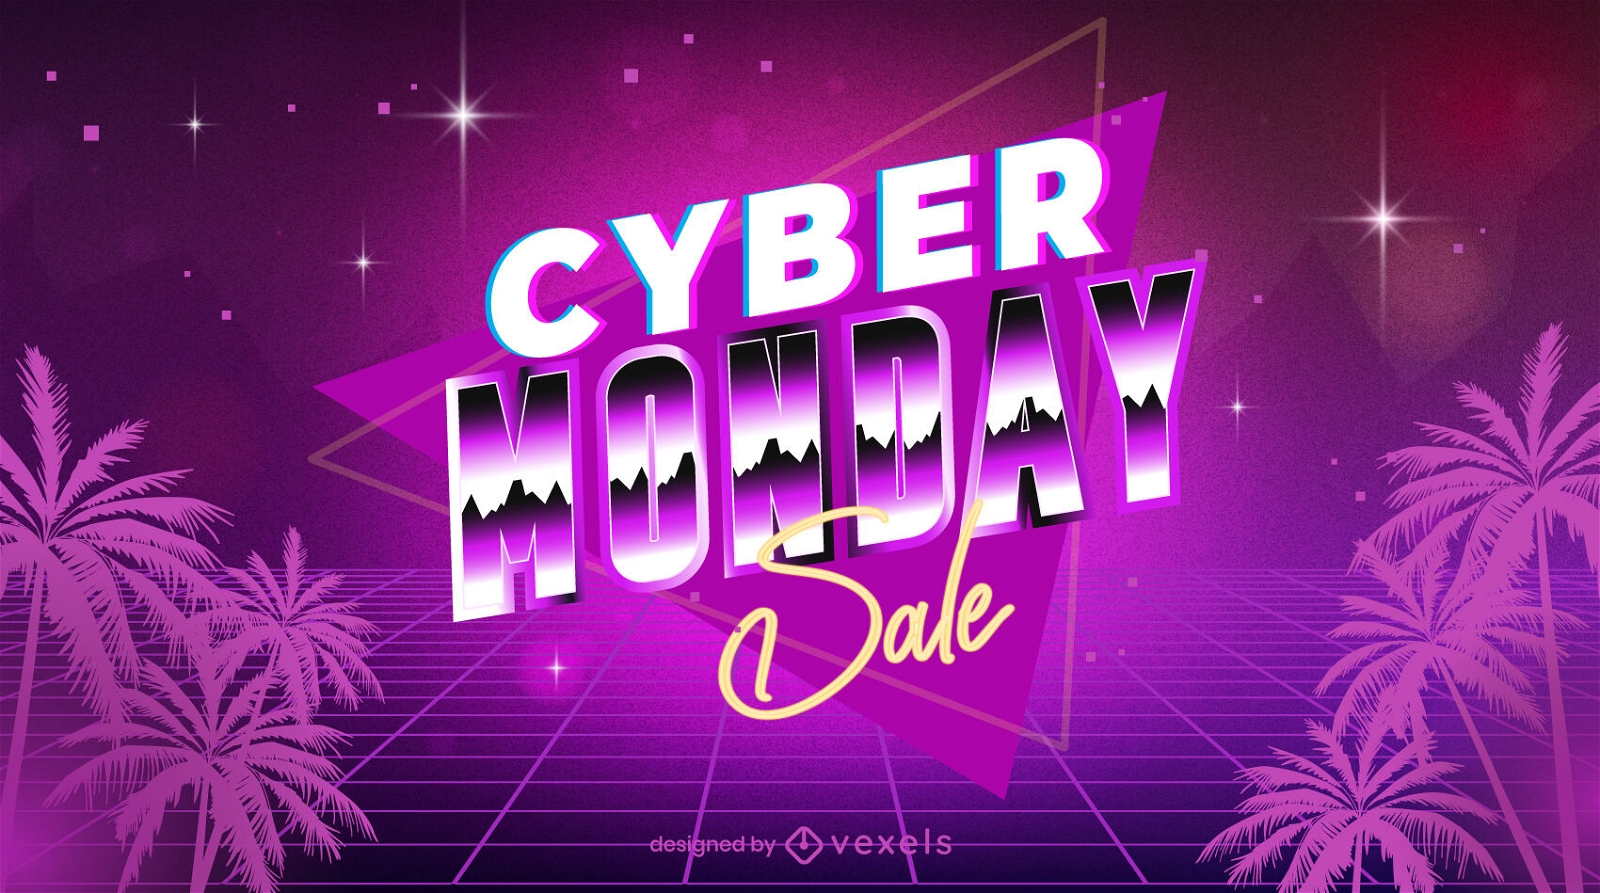 Cyber Monday sale illustration design